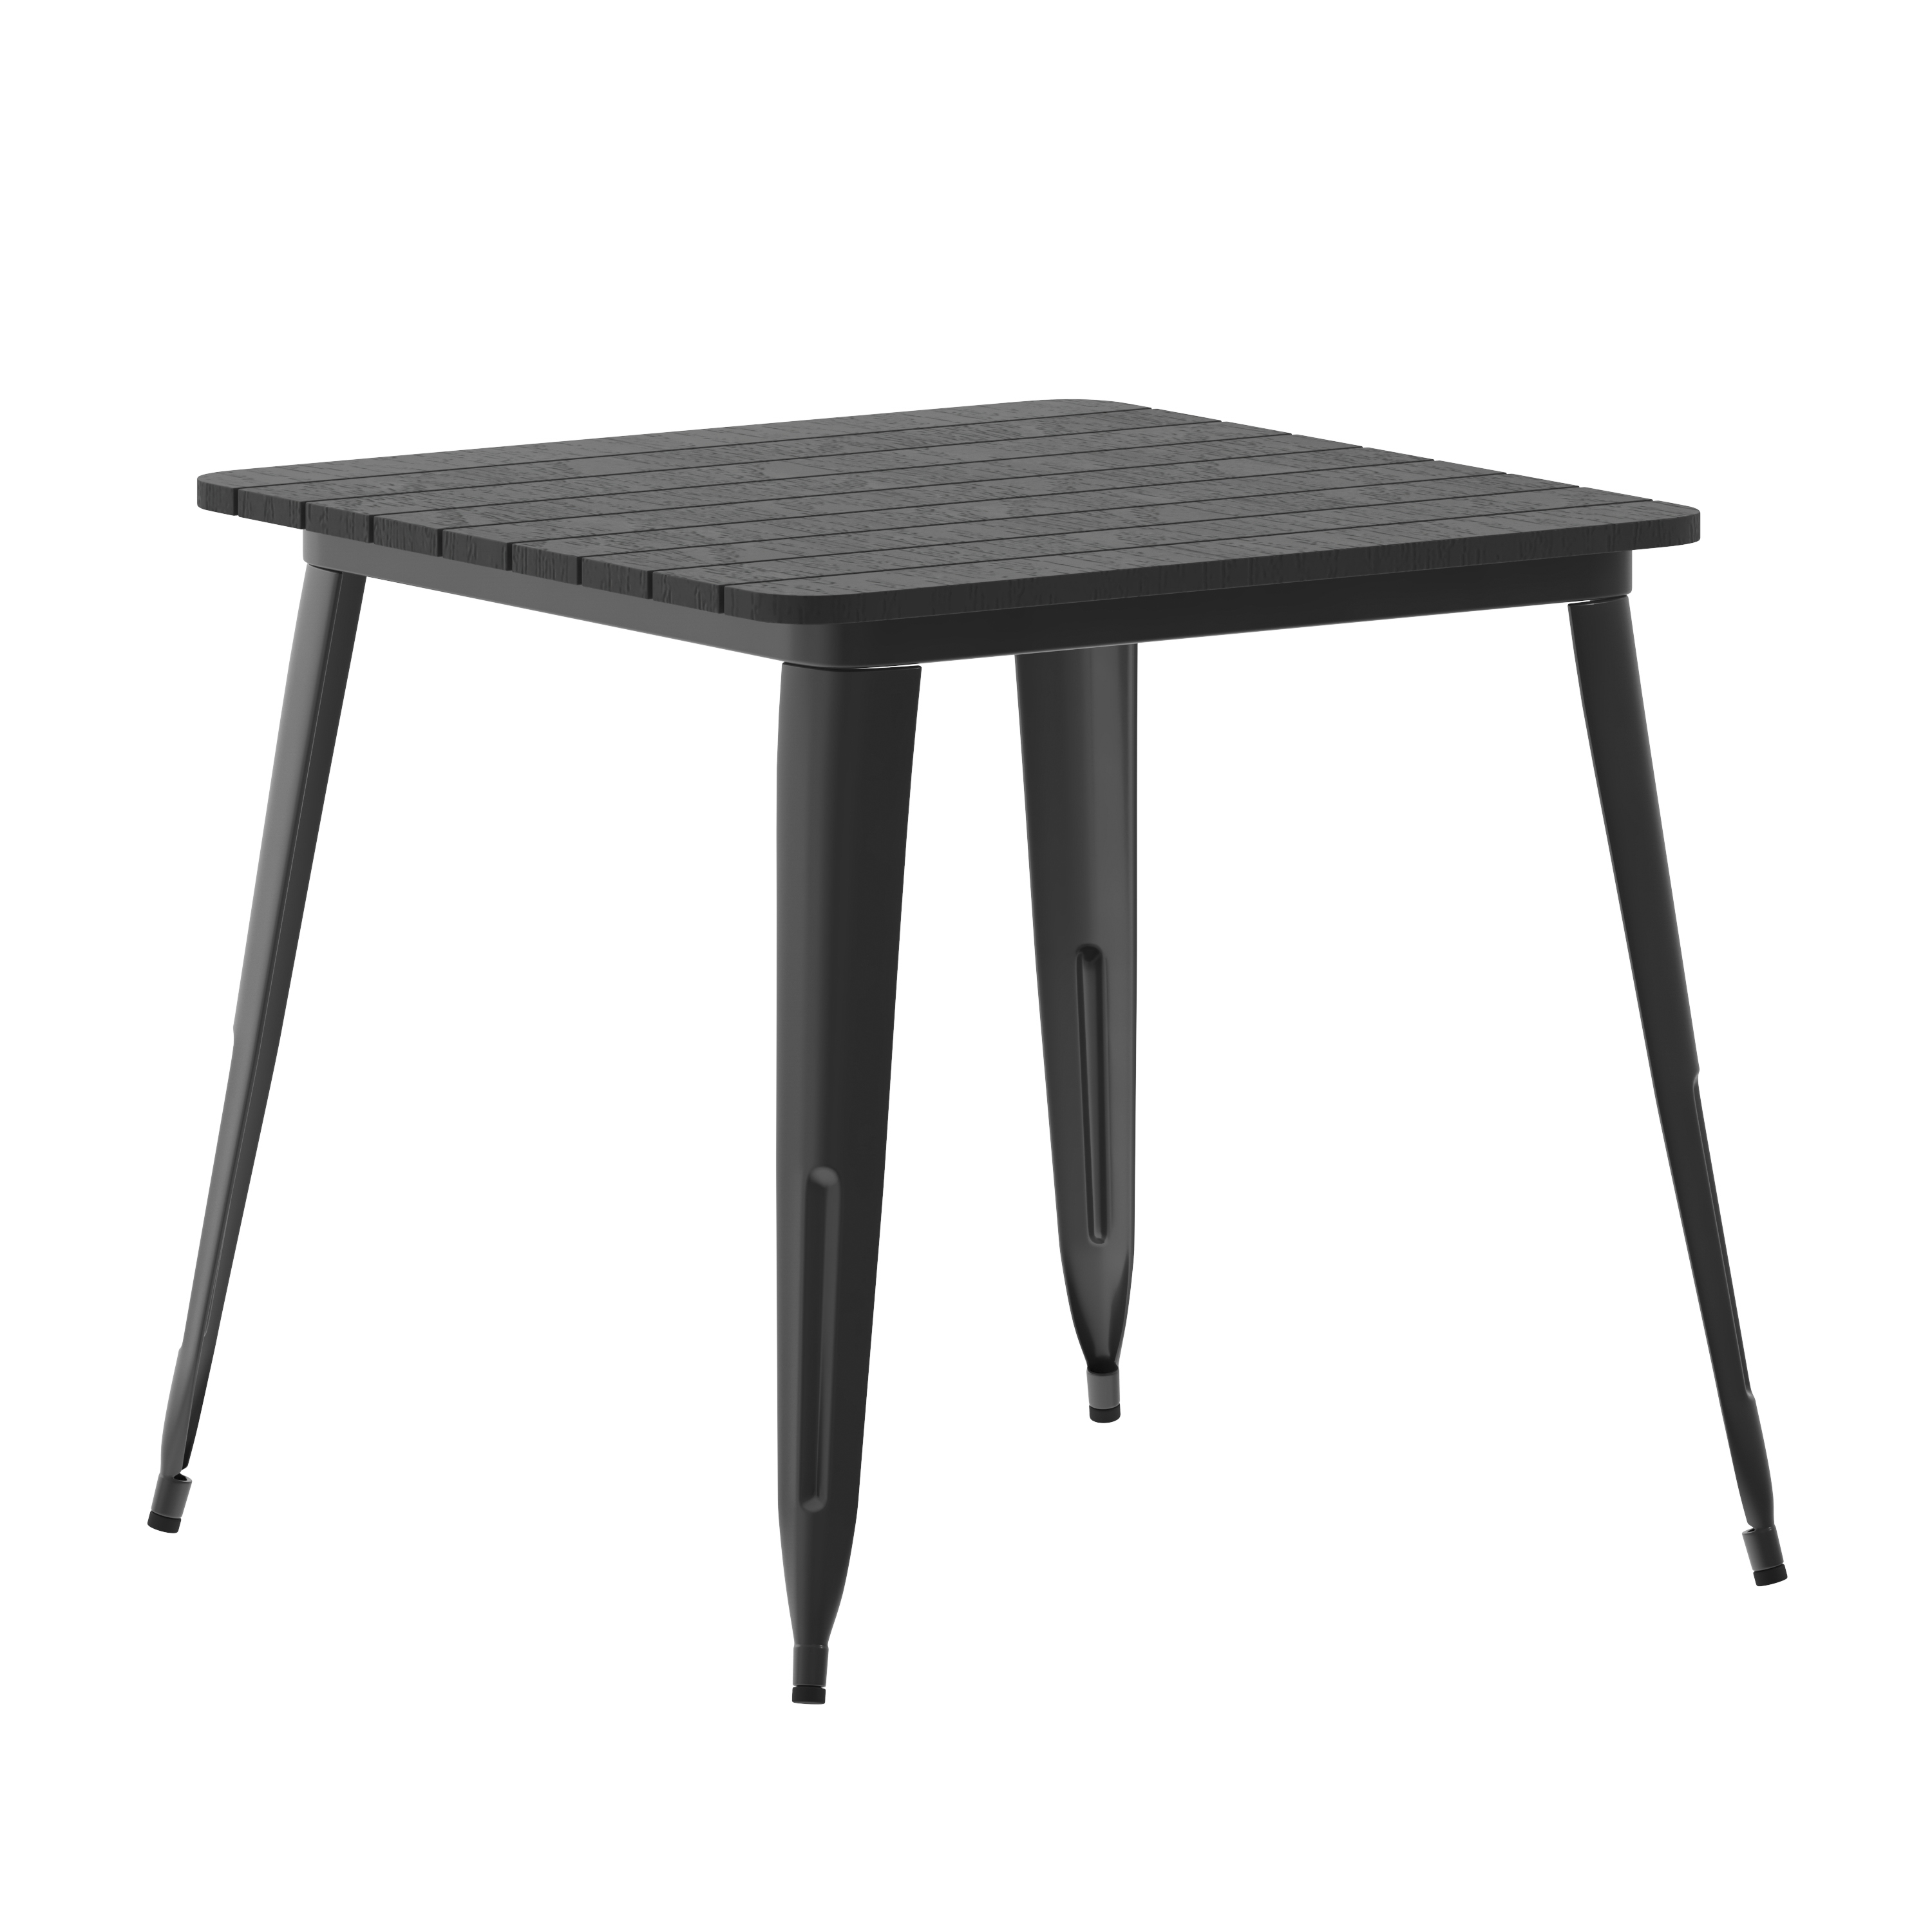 Flash Furniture JJ-T14619-80-BKBK-GG Commercial Poly Resin Square Patio Dining Table, 31.5", Black/Black